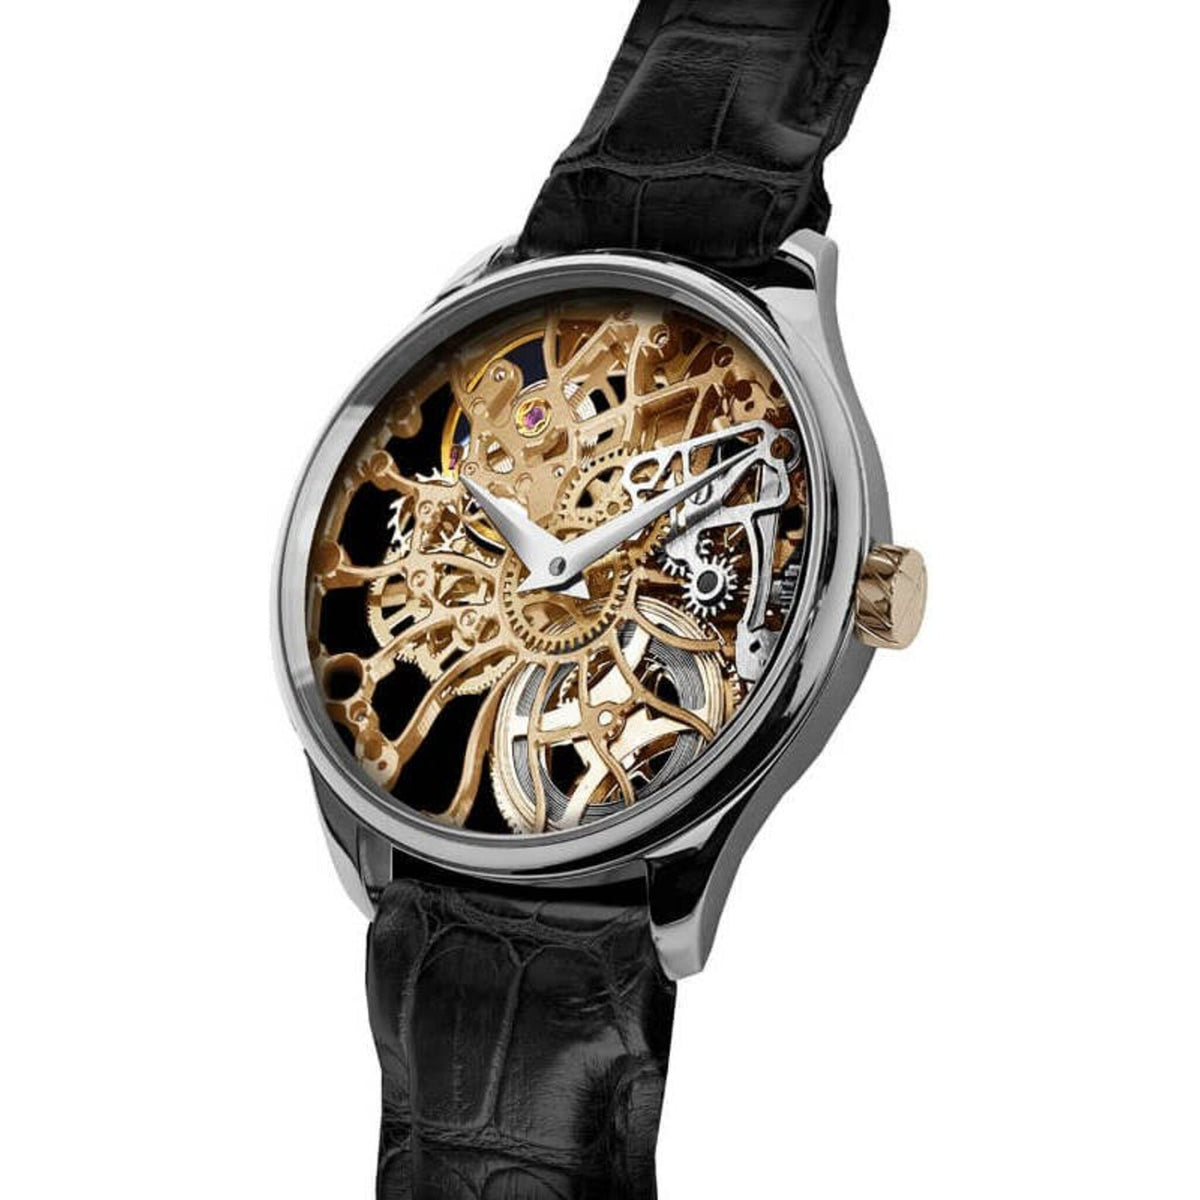 Elegant Artya Golden Shams Skeleton watch displayed at Robinson's Jewelers